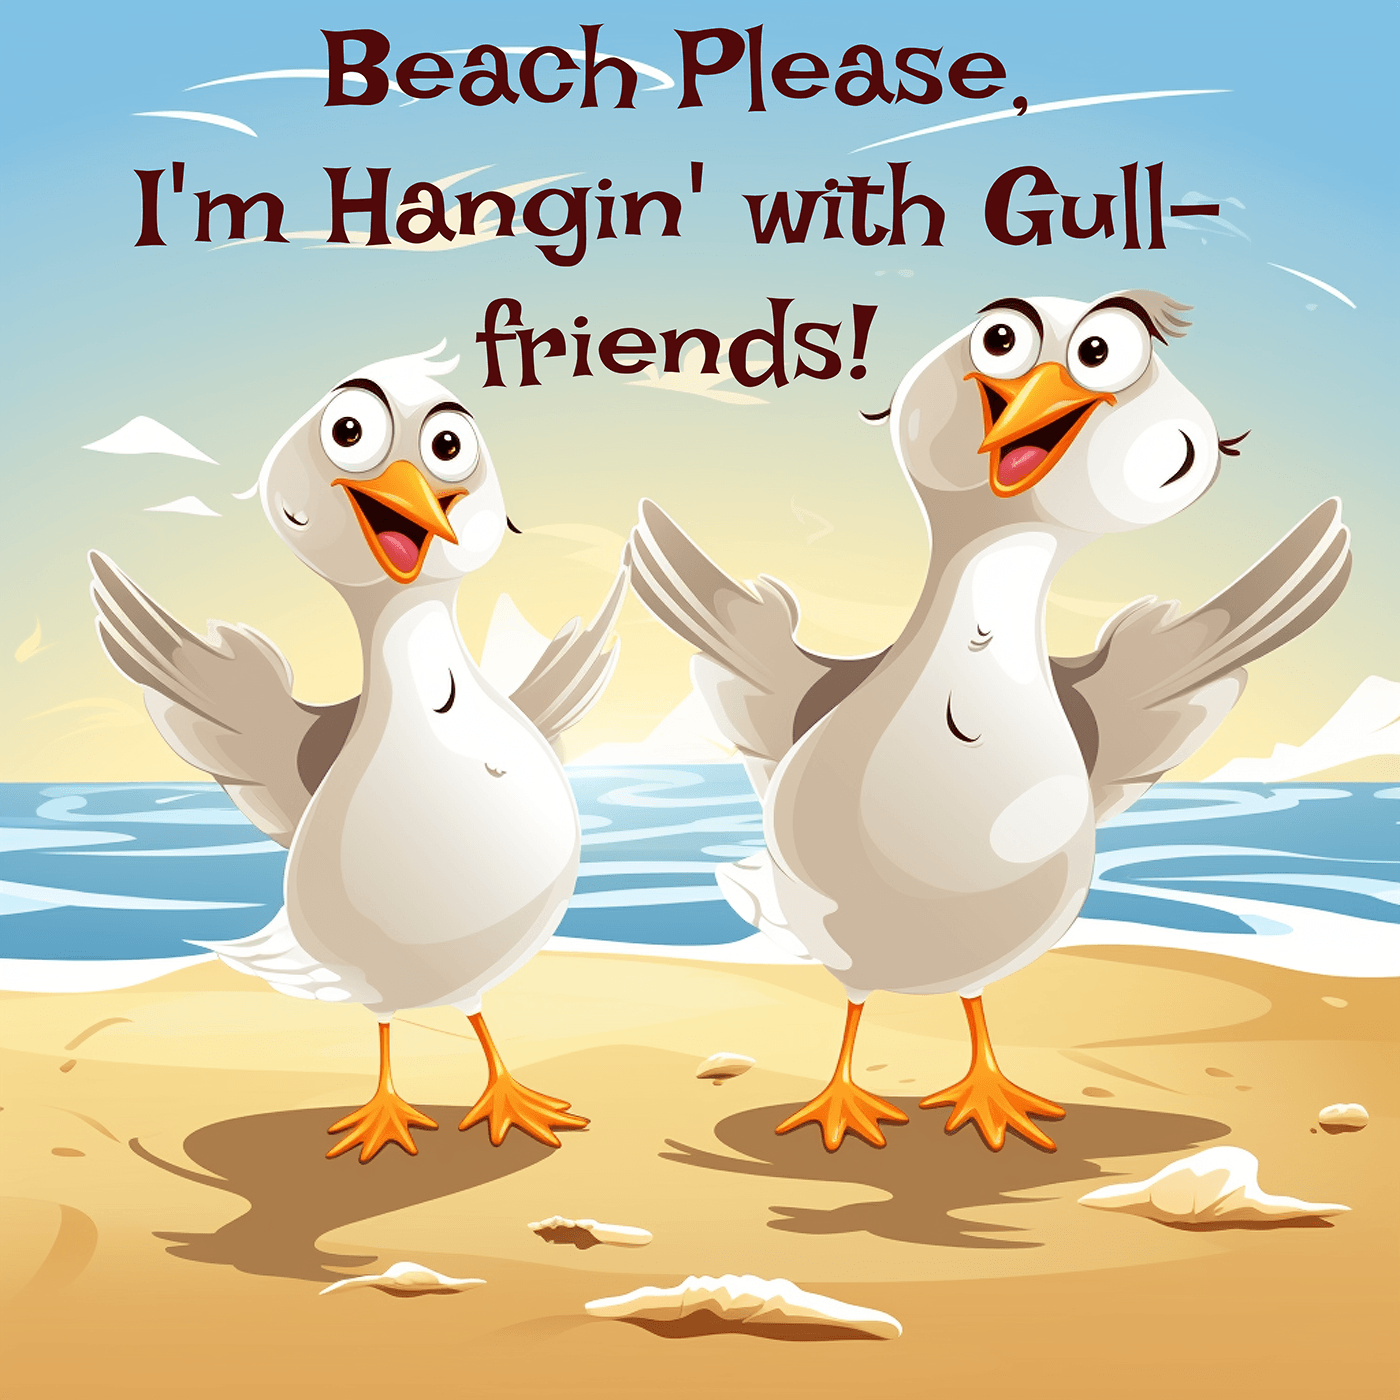 Beach Please, I'm Hangin' with Gull-friends!